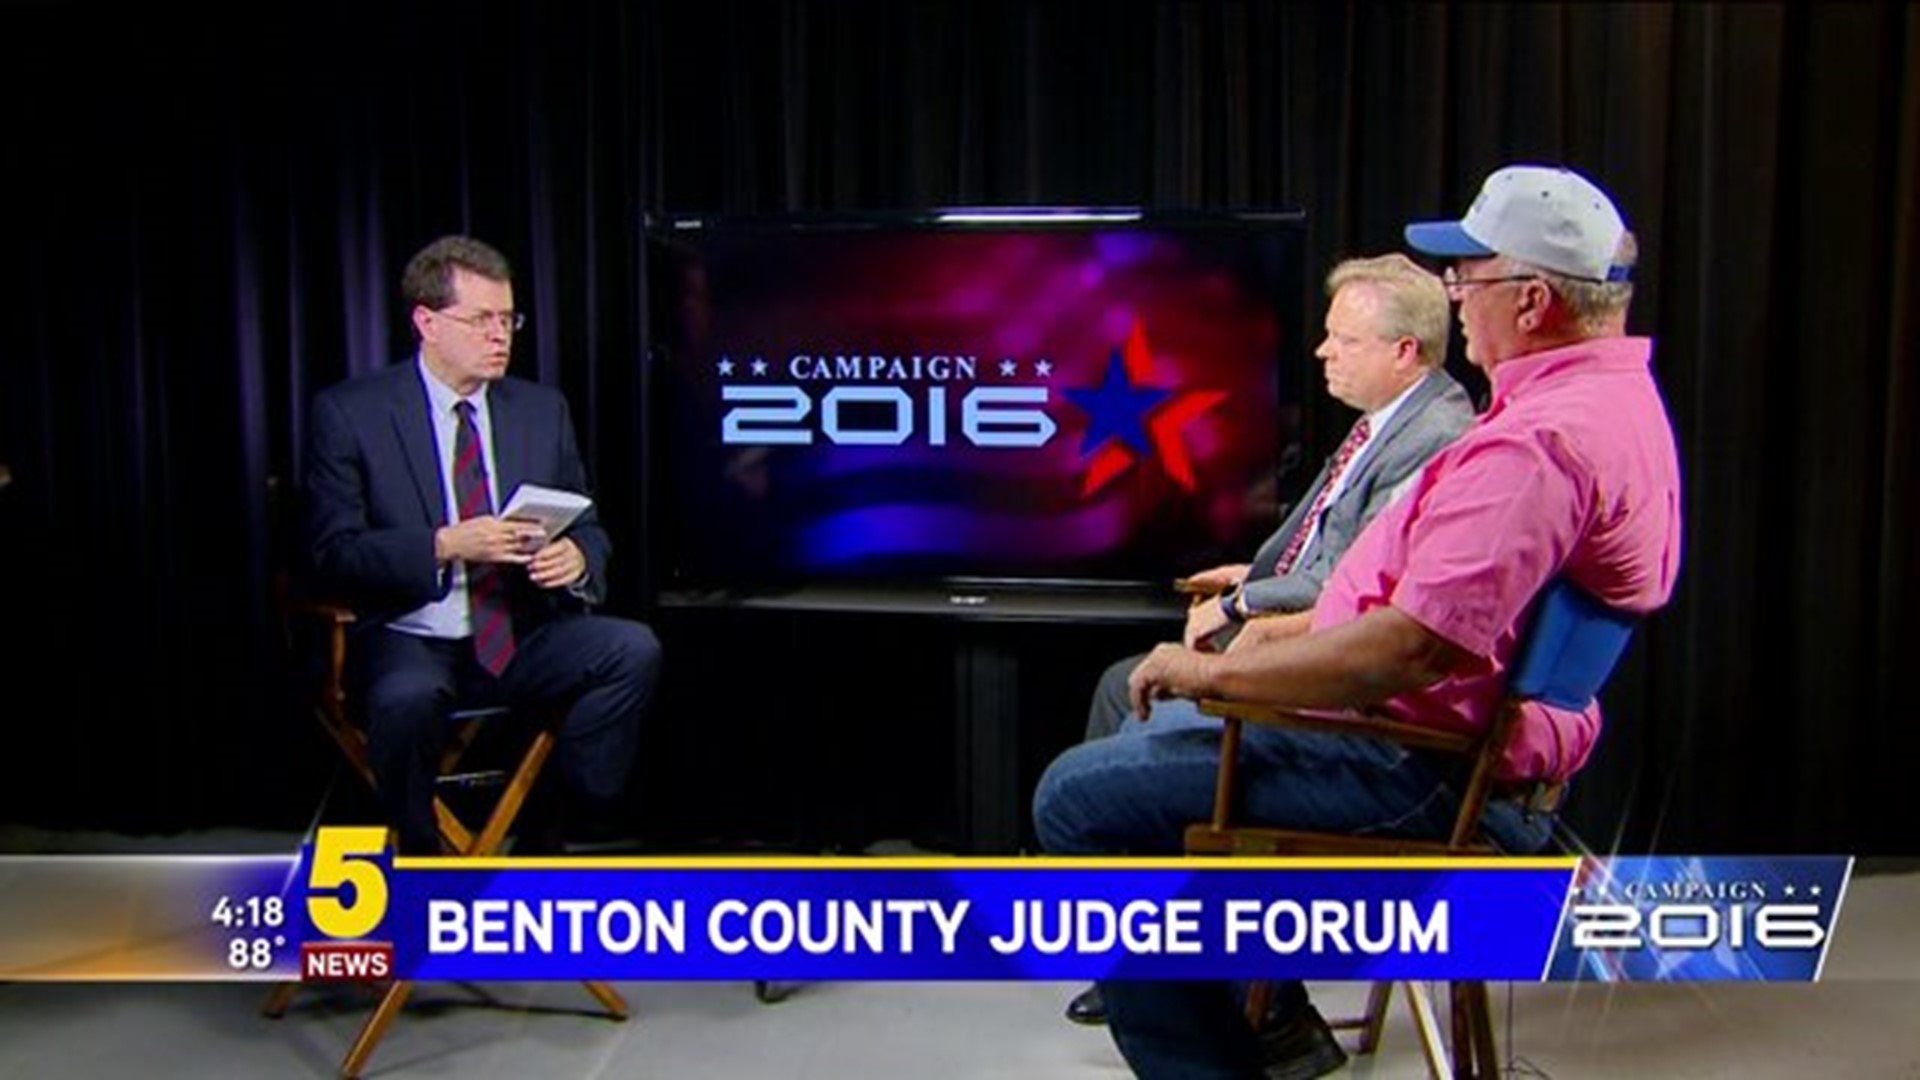 Benton County Judge Forum